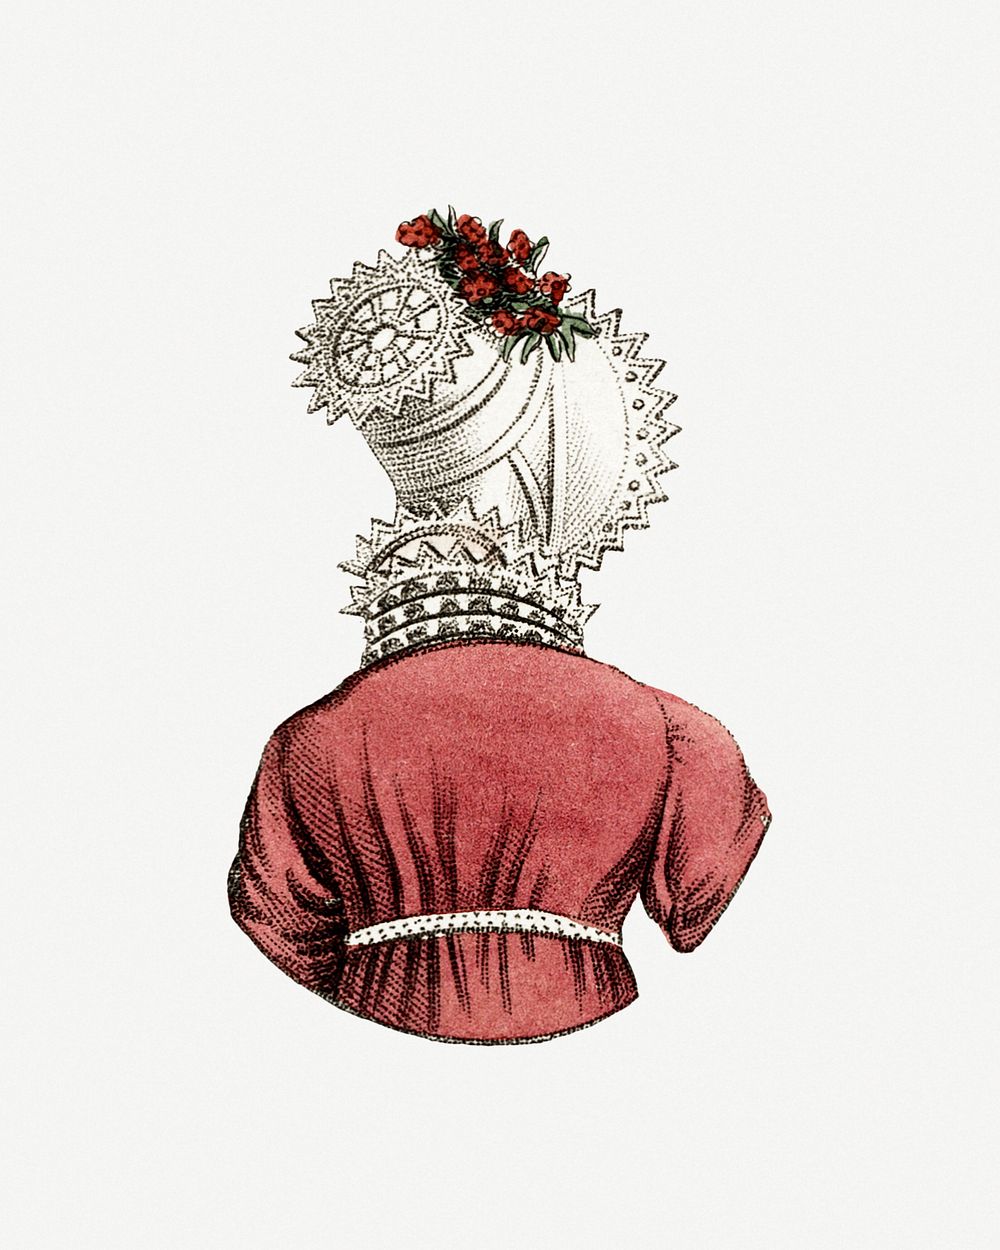 Vintage fashion head dress illustration, remix from artworks by John Bell